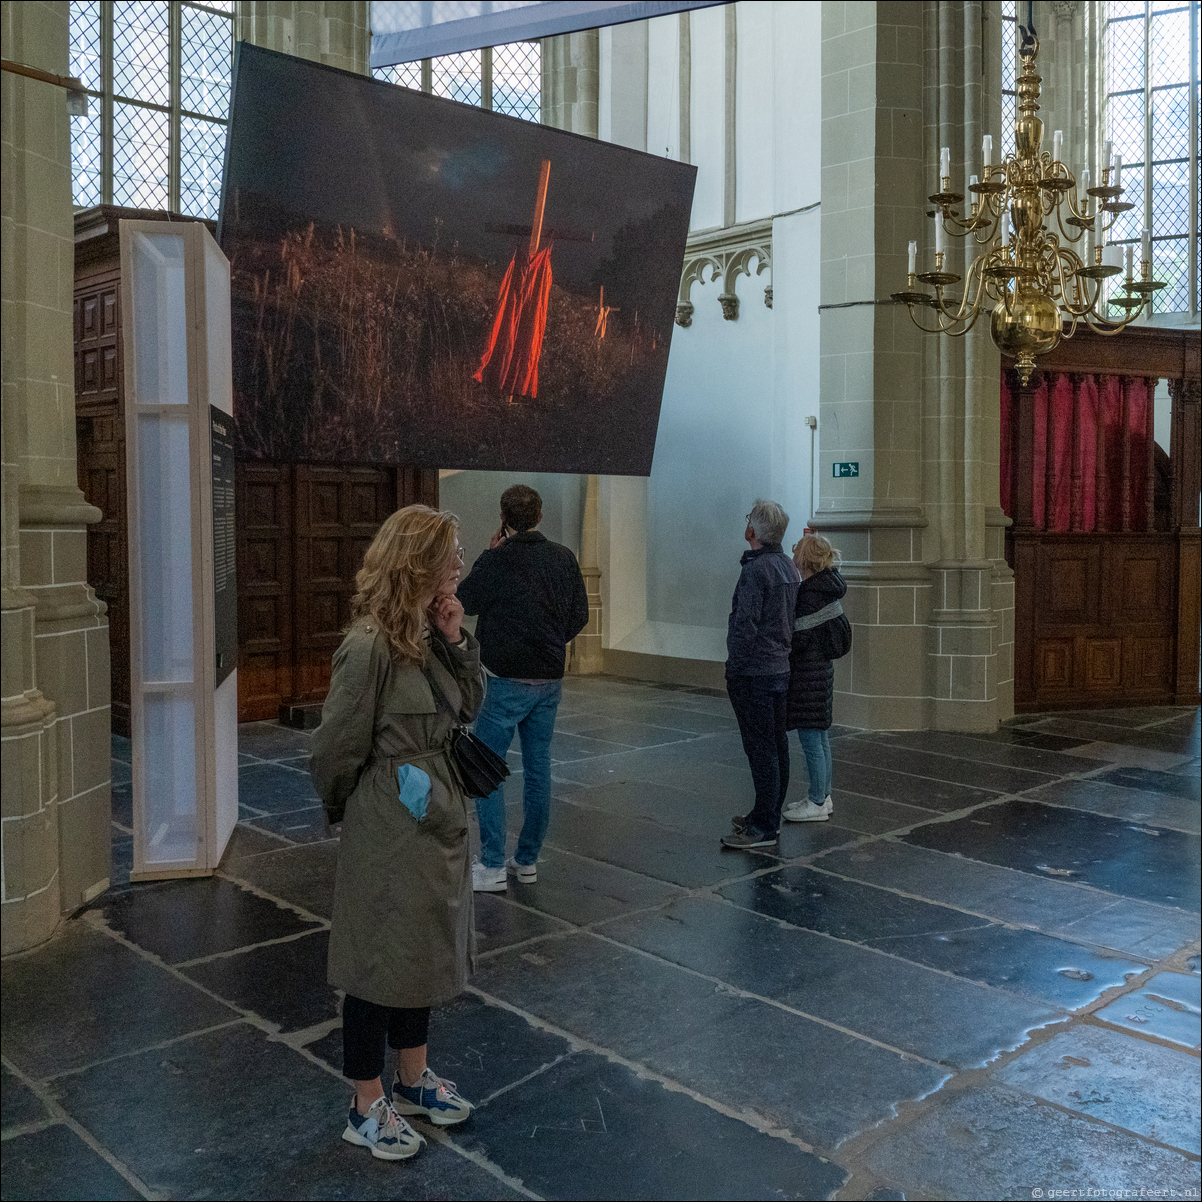  World Press Photo Exhibition 2022 - Nieuwe Kerk Amsterdam